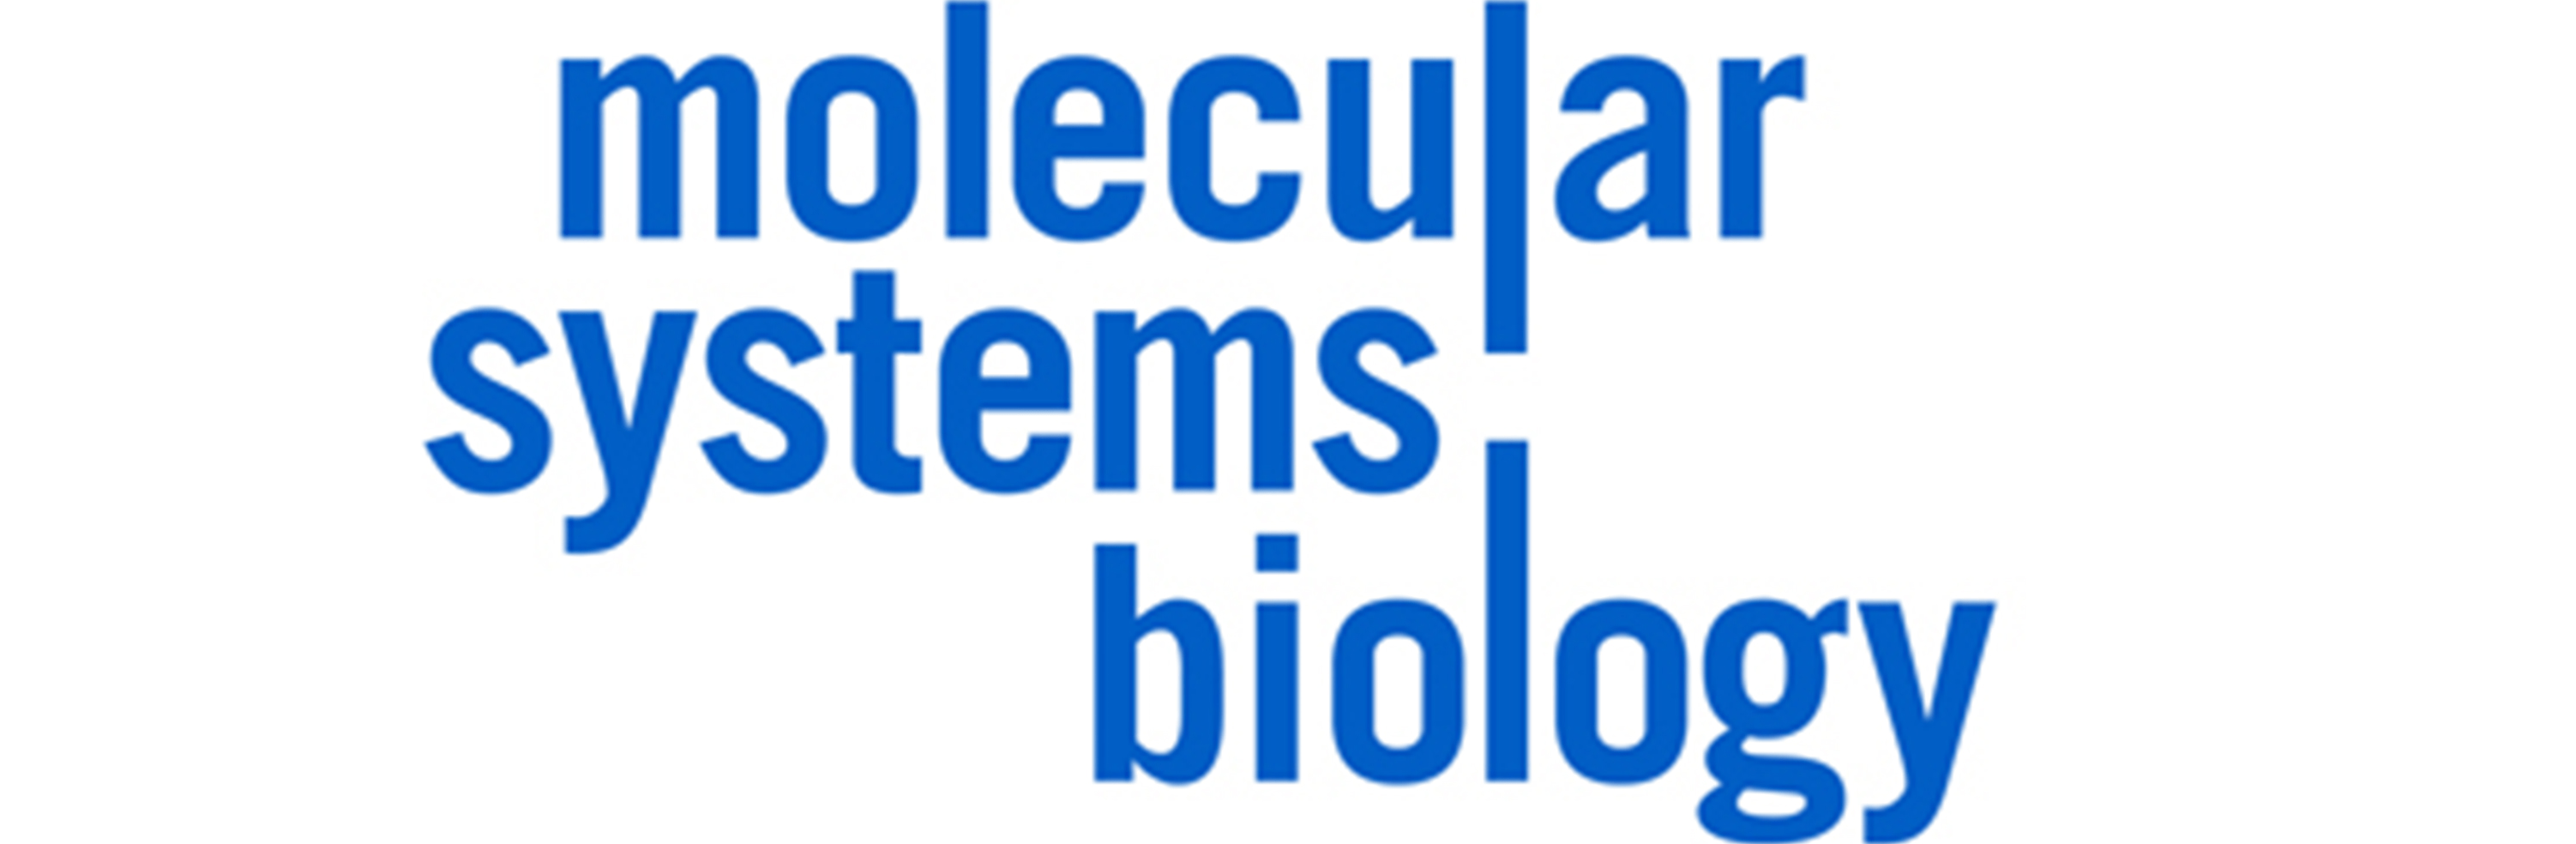 Un nuovo paper di Francesco Iorio su Molecular Systems Biology